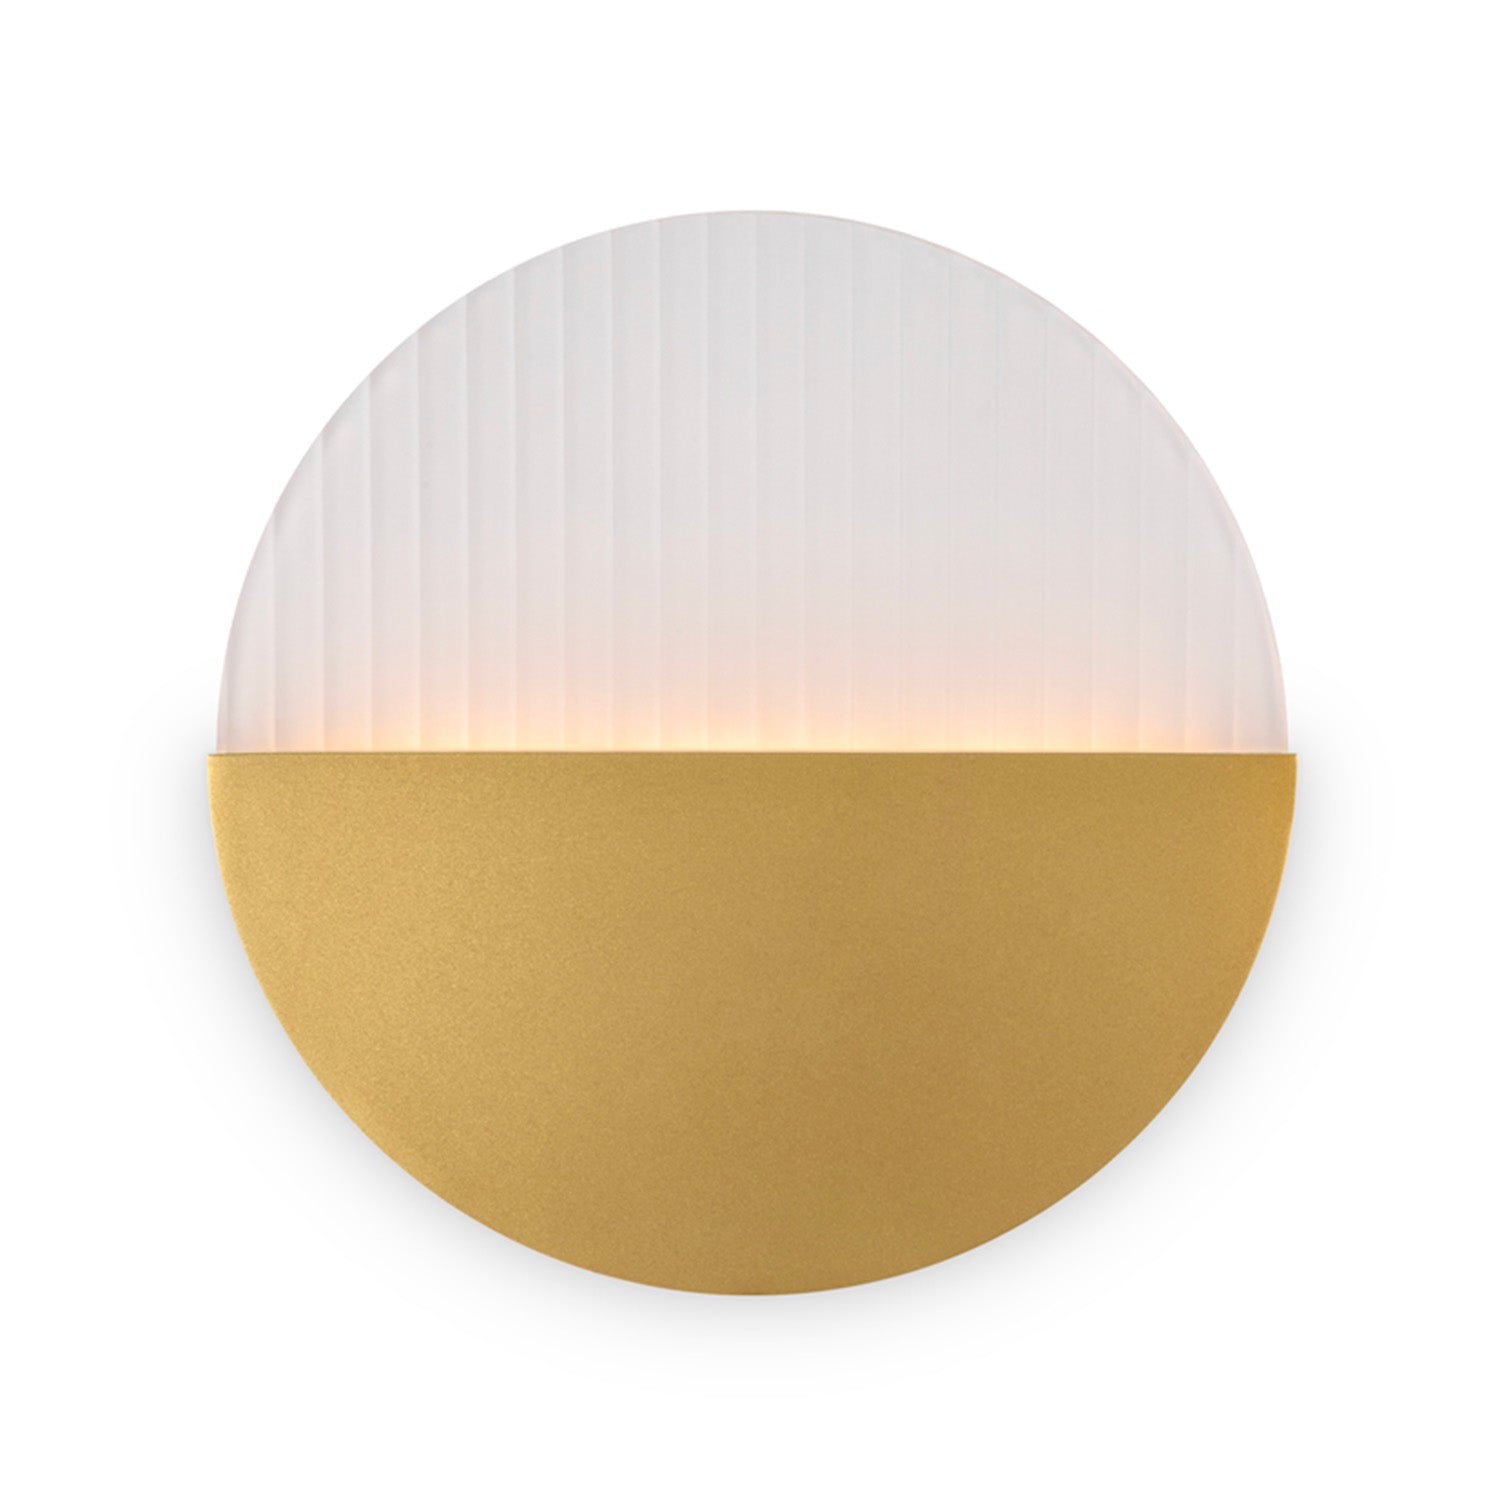 JUPITER - Circular gold and white art deco wall light